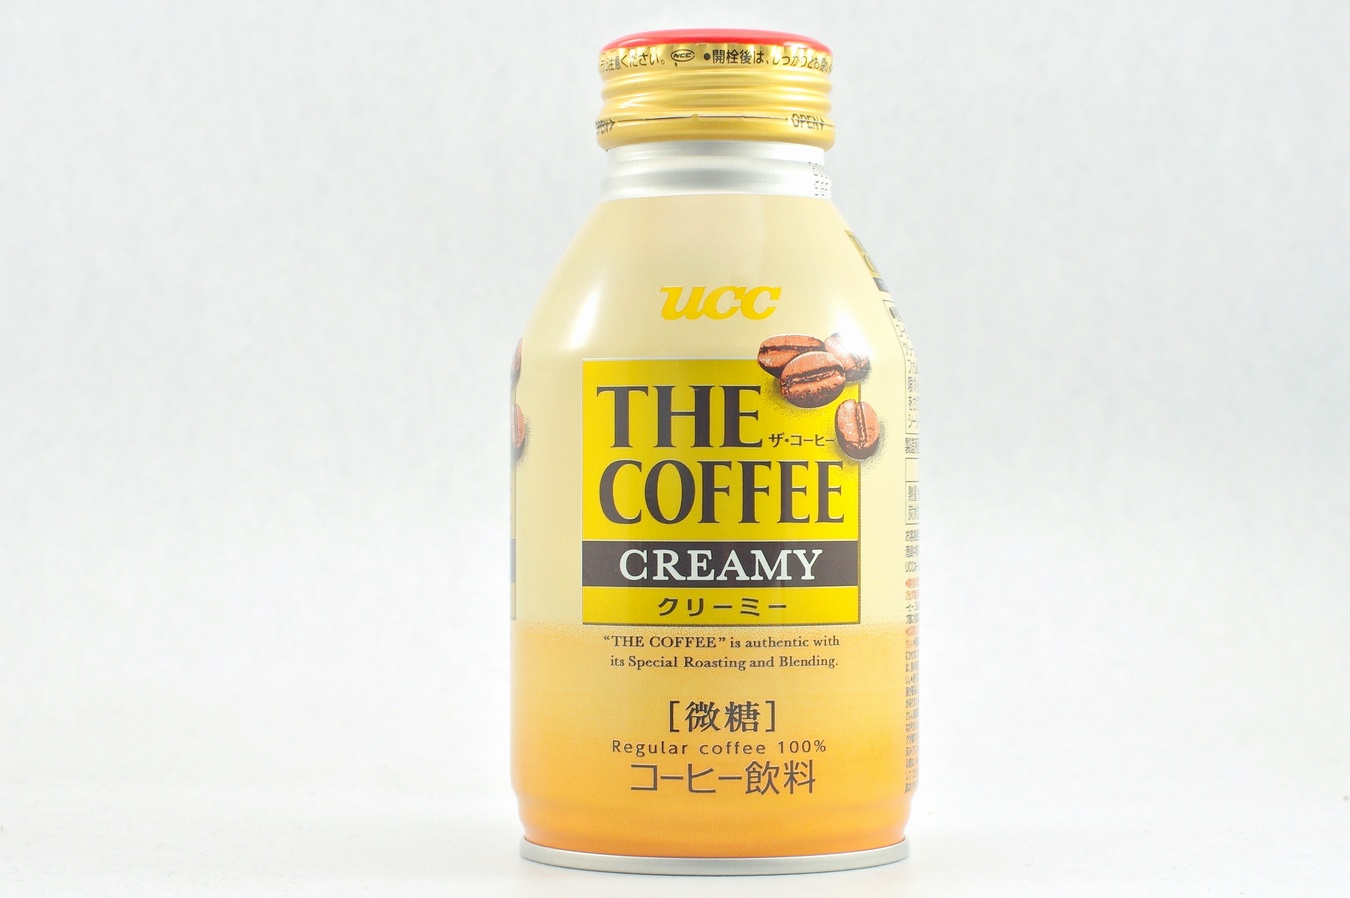 UCC THE COFFEE クリーミー 2015年3月